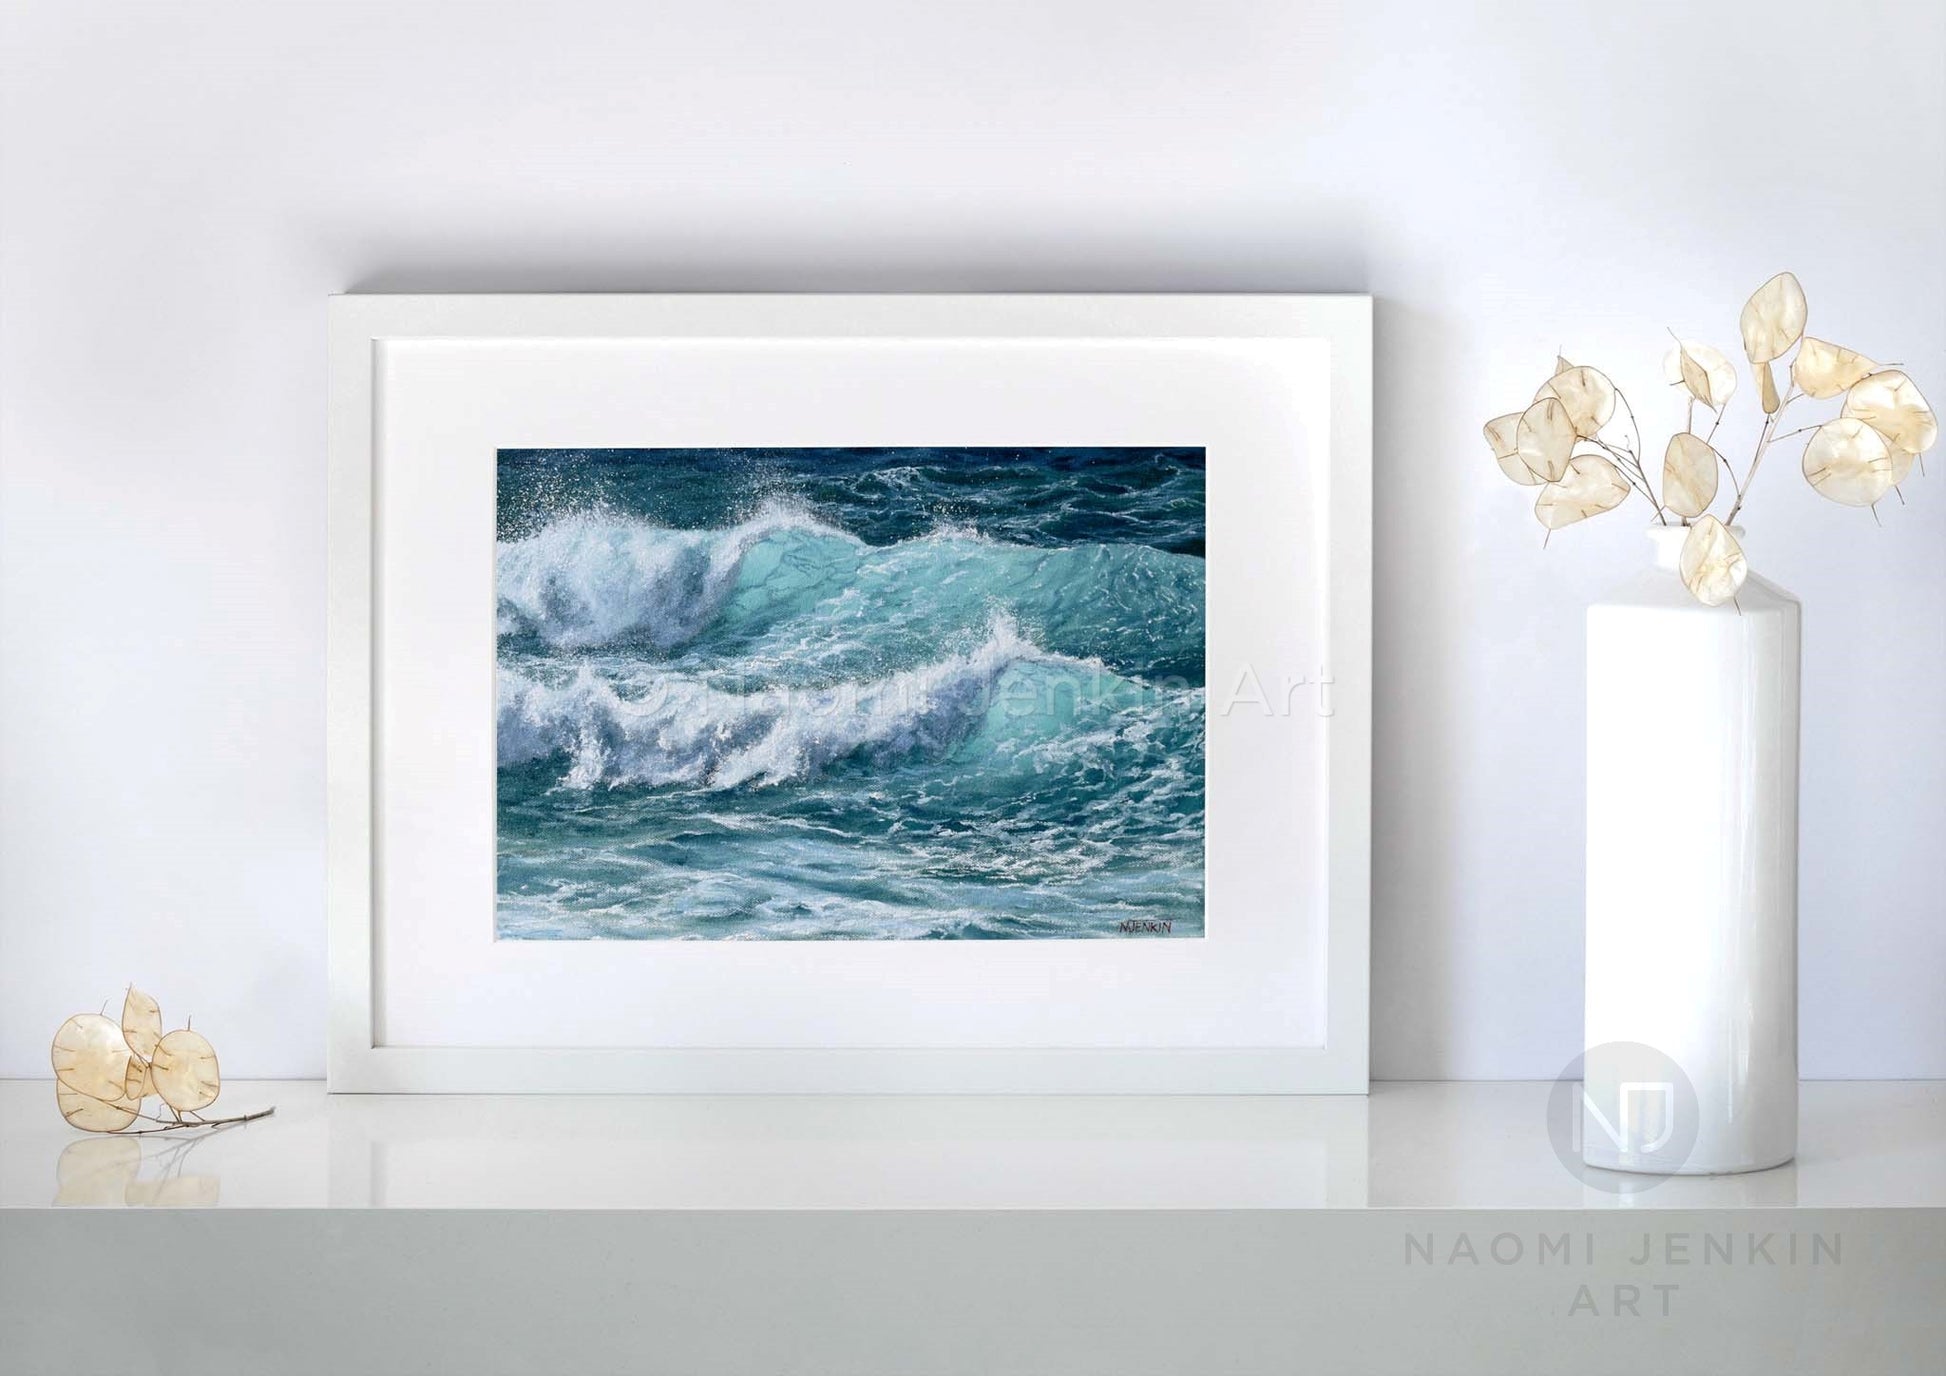 Curling Waves' seascape print by artist Naomi Jenkin Art in a white frame